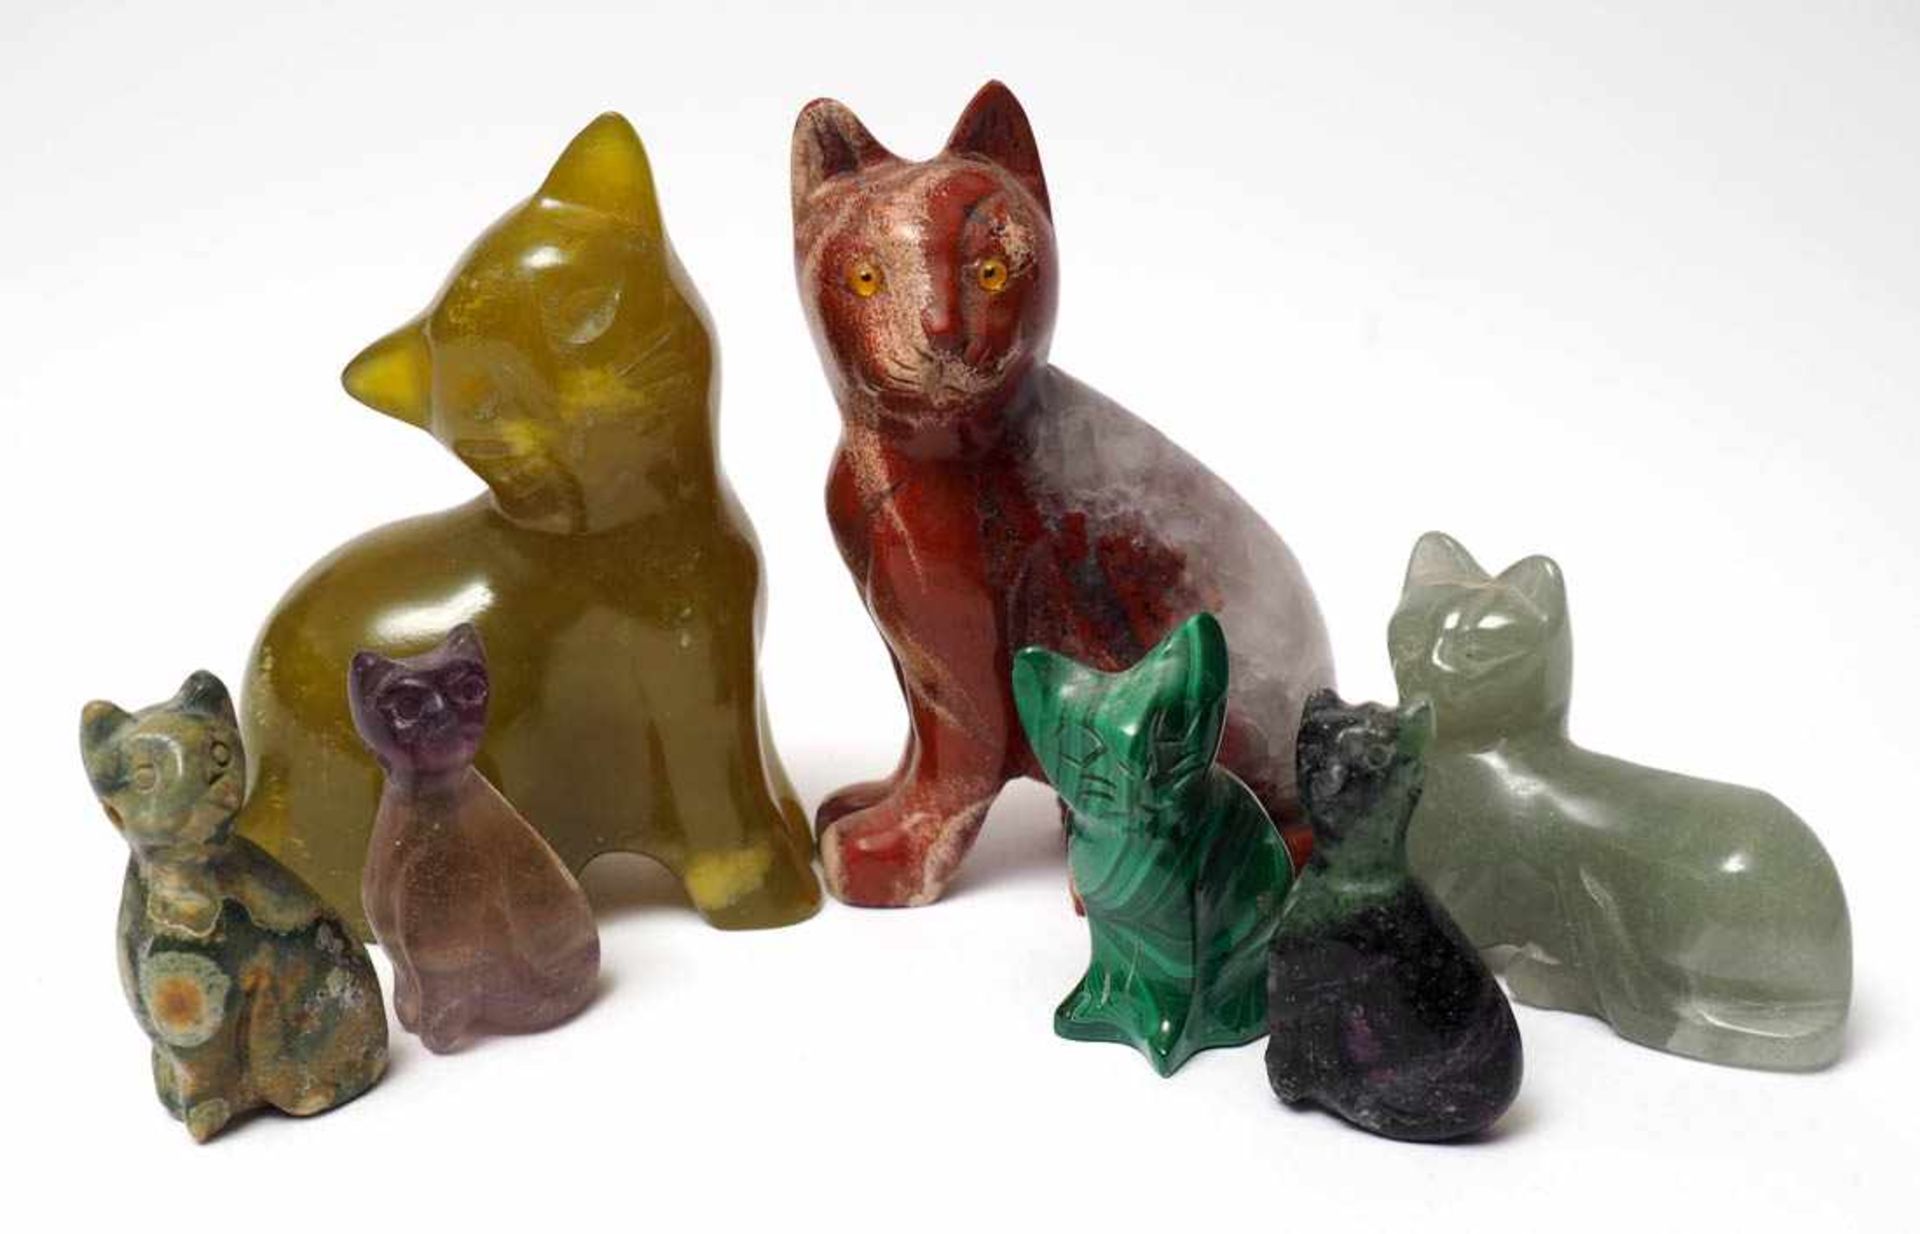 Sieben div. Katzenfiguren Aus verschiedenen Halbedelsteinen (Jade, Achat etc.). H.4-7cm.